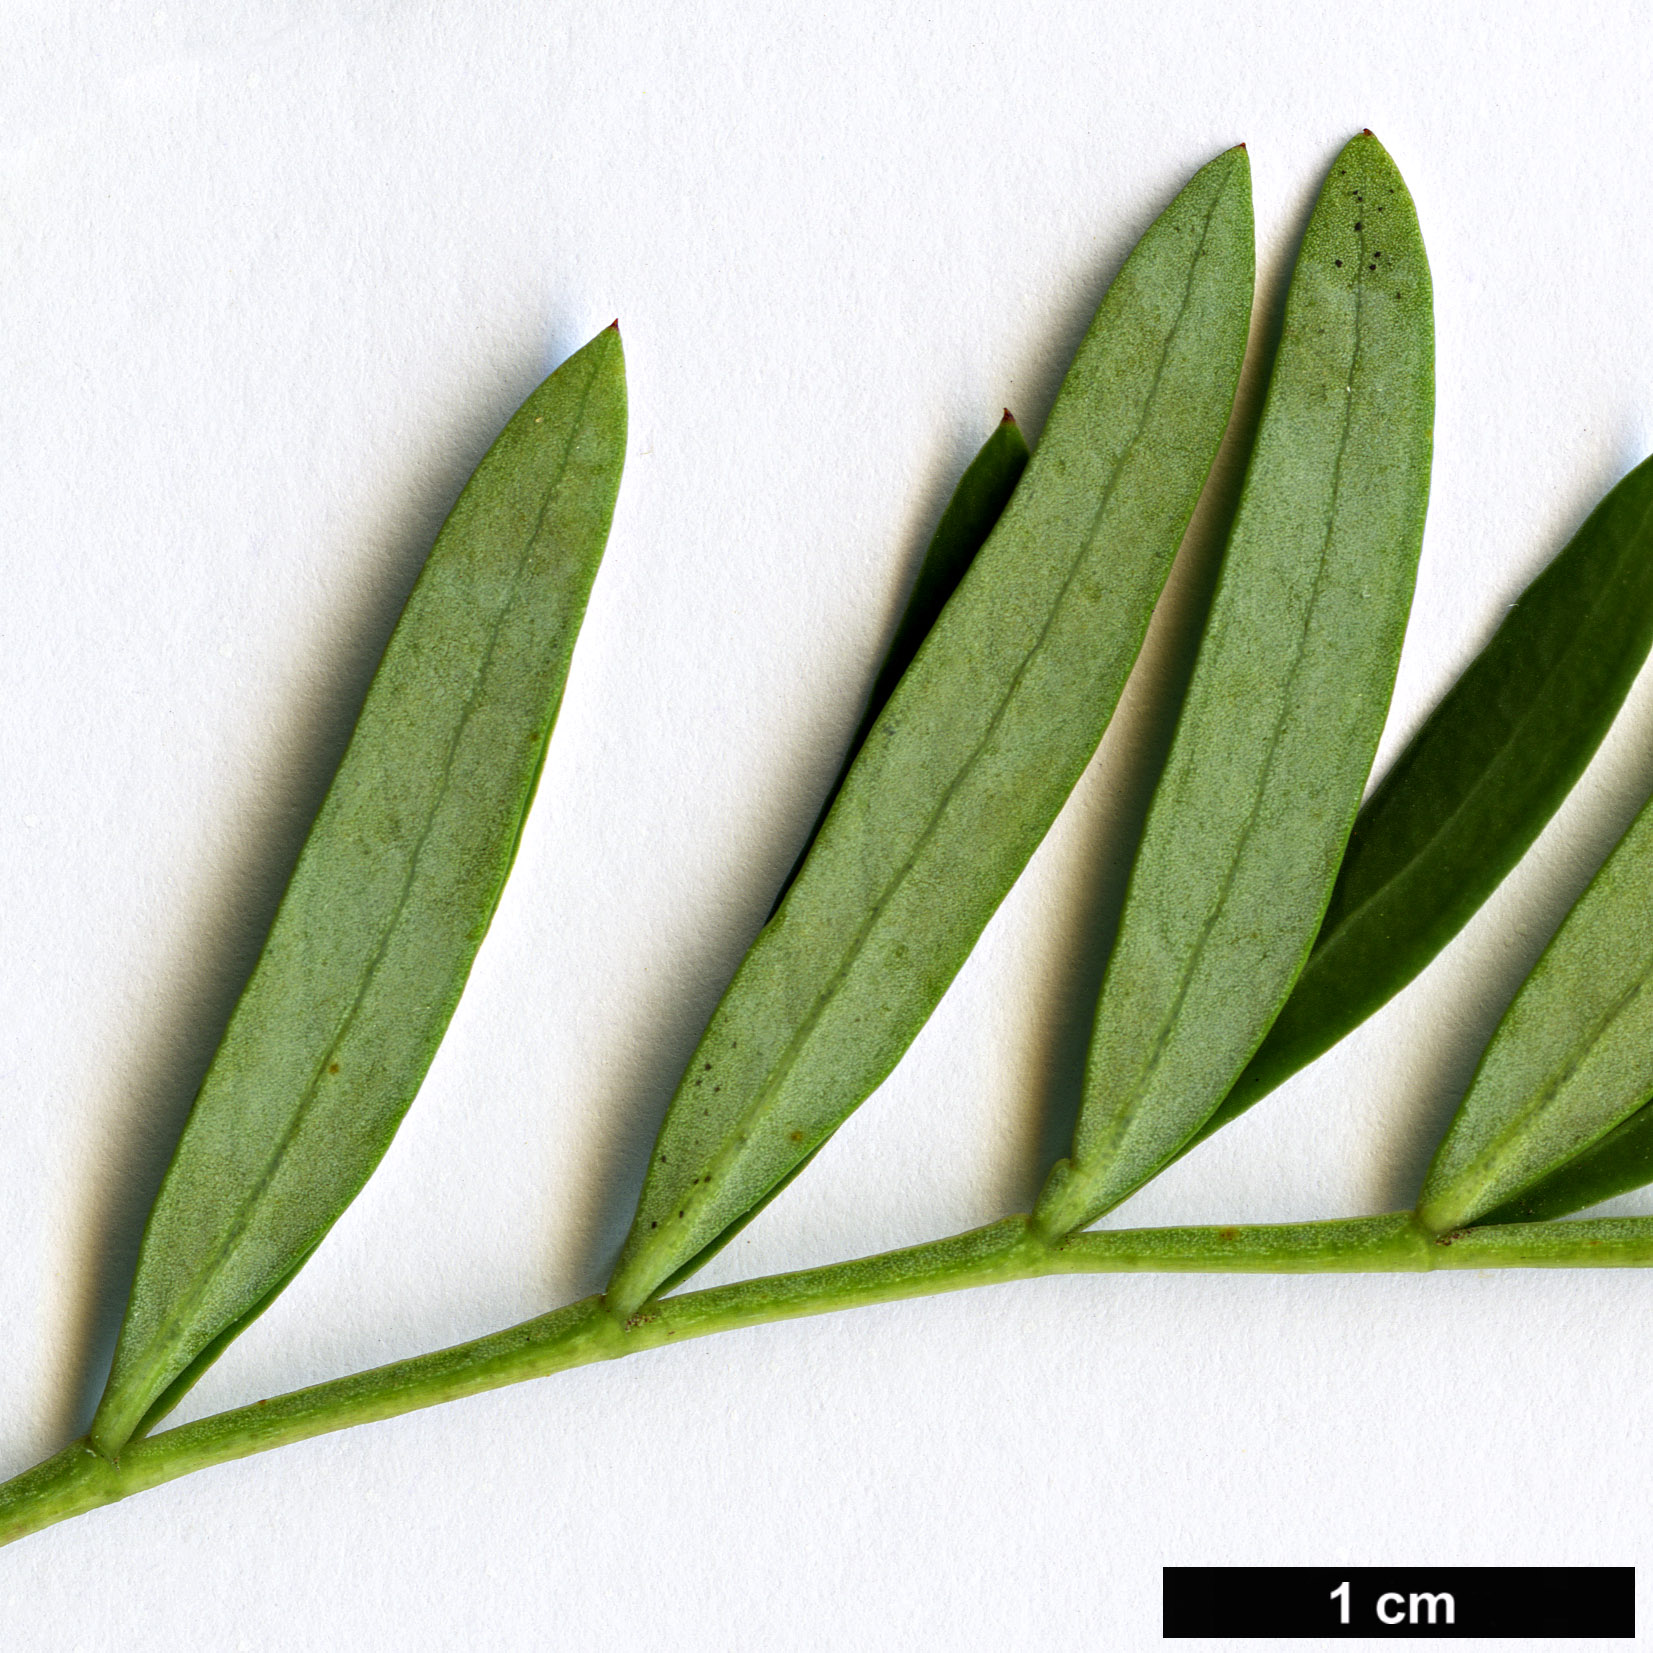 High resolution image: Family: Araliaceae - Genus: Polyscias - Taxon: sambucifolia